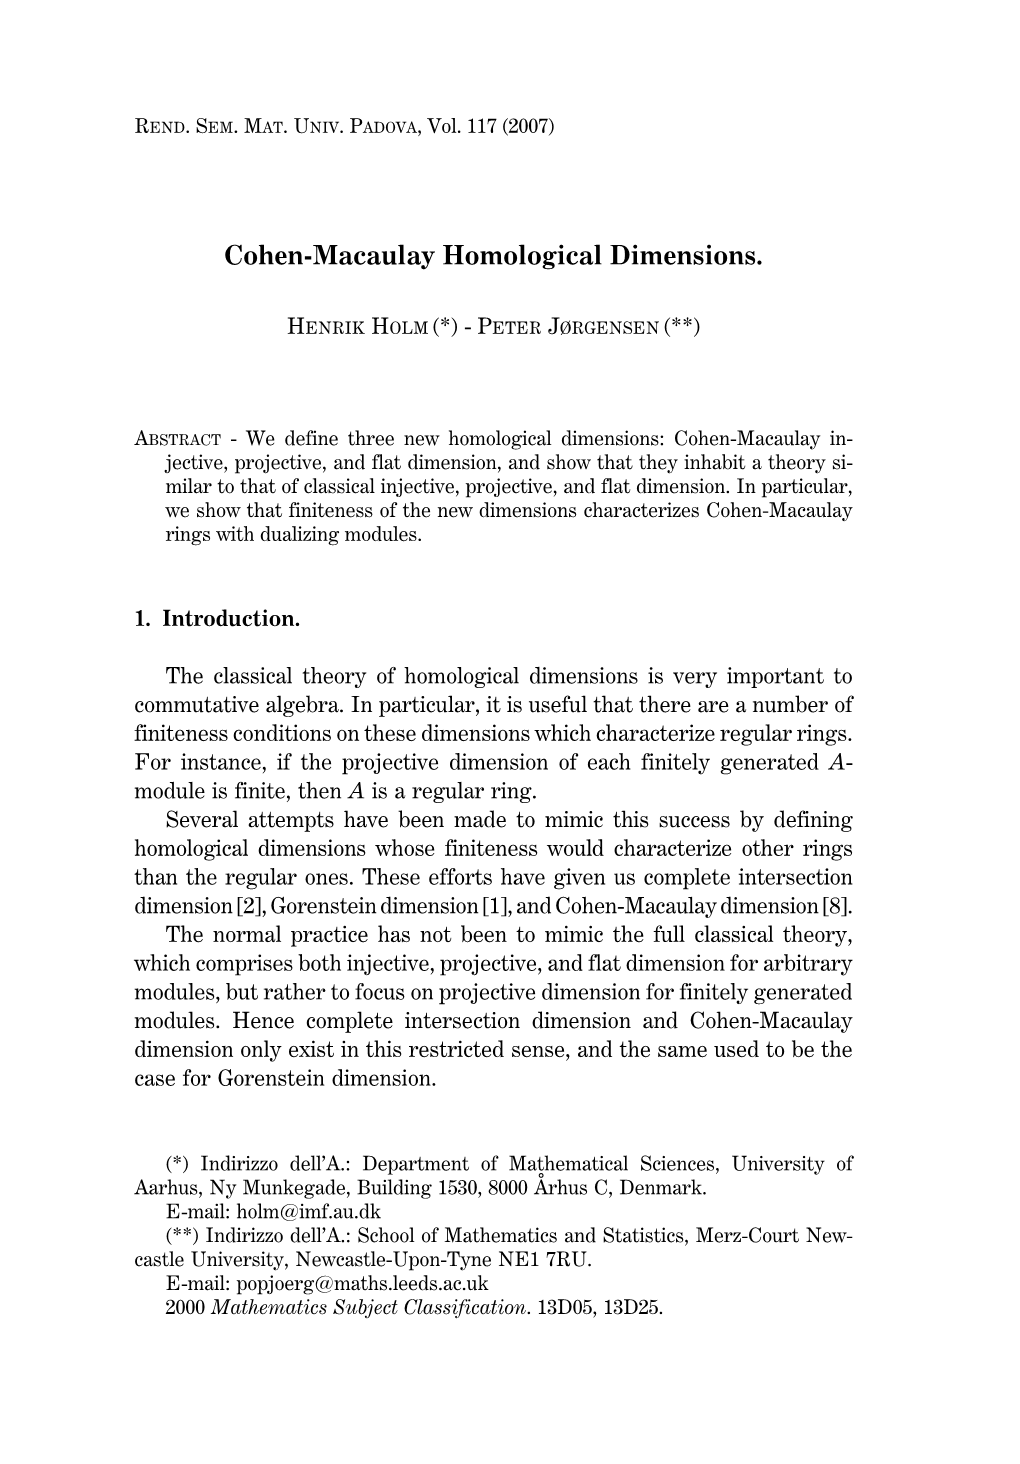 Cohen-Macaulay Homological Dimensions